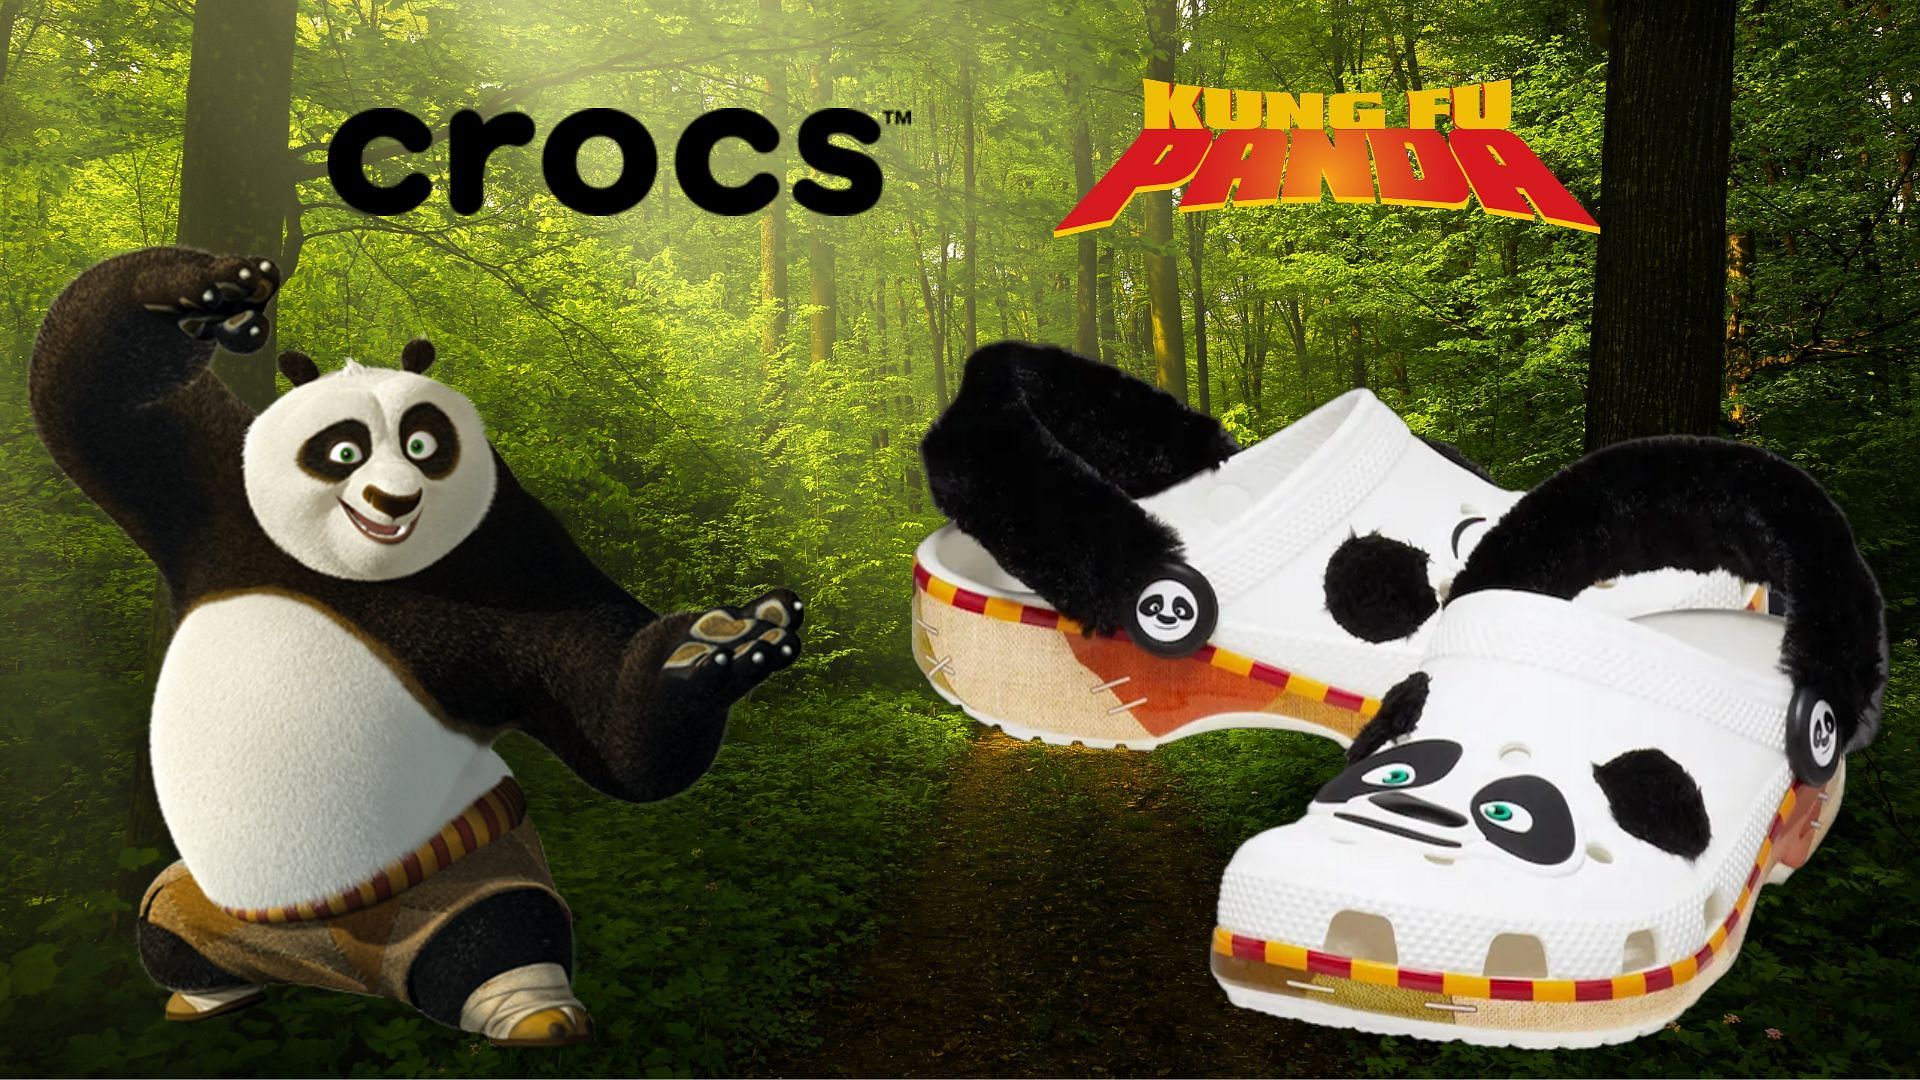 Kung Fu Panda x Crocs Classic Clog (Image via Twitter/@avgkpfenjoyer)